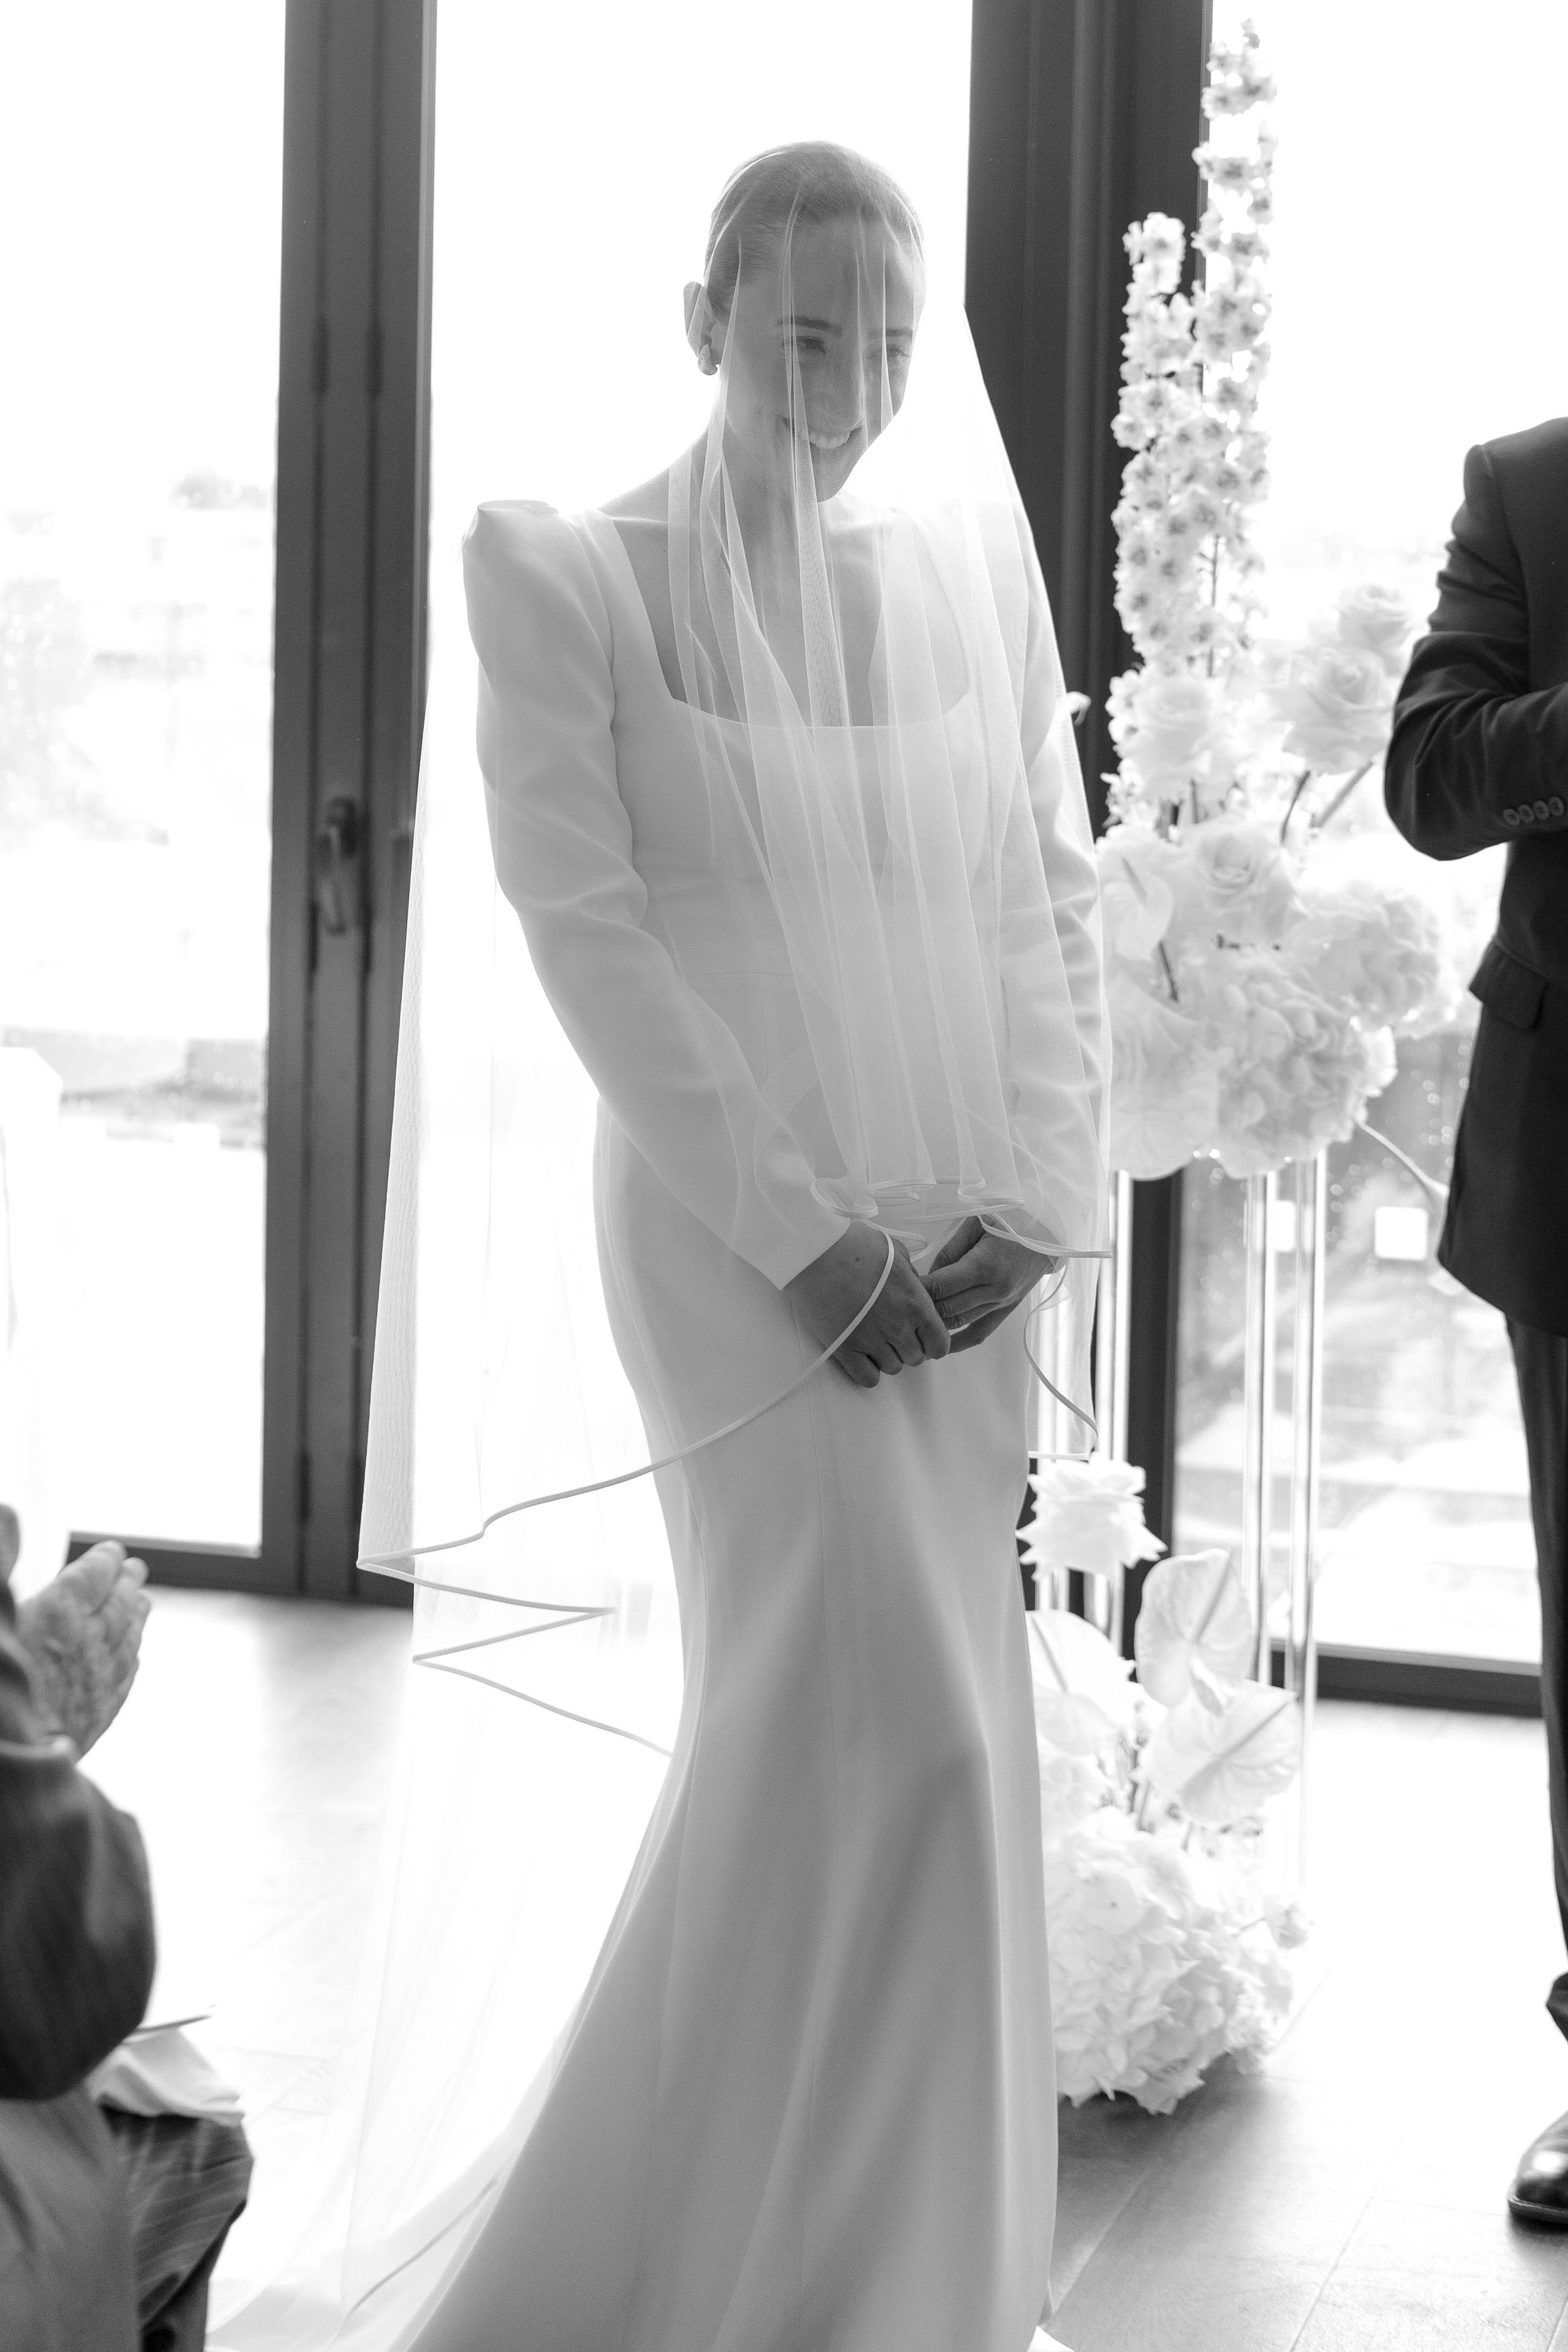 Beautiful bride Elizabeth wore the Foxglove wedding dress by Halfpenny London